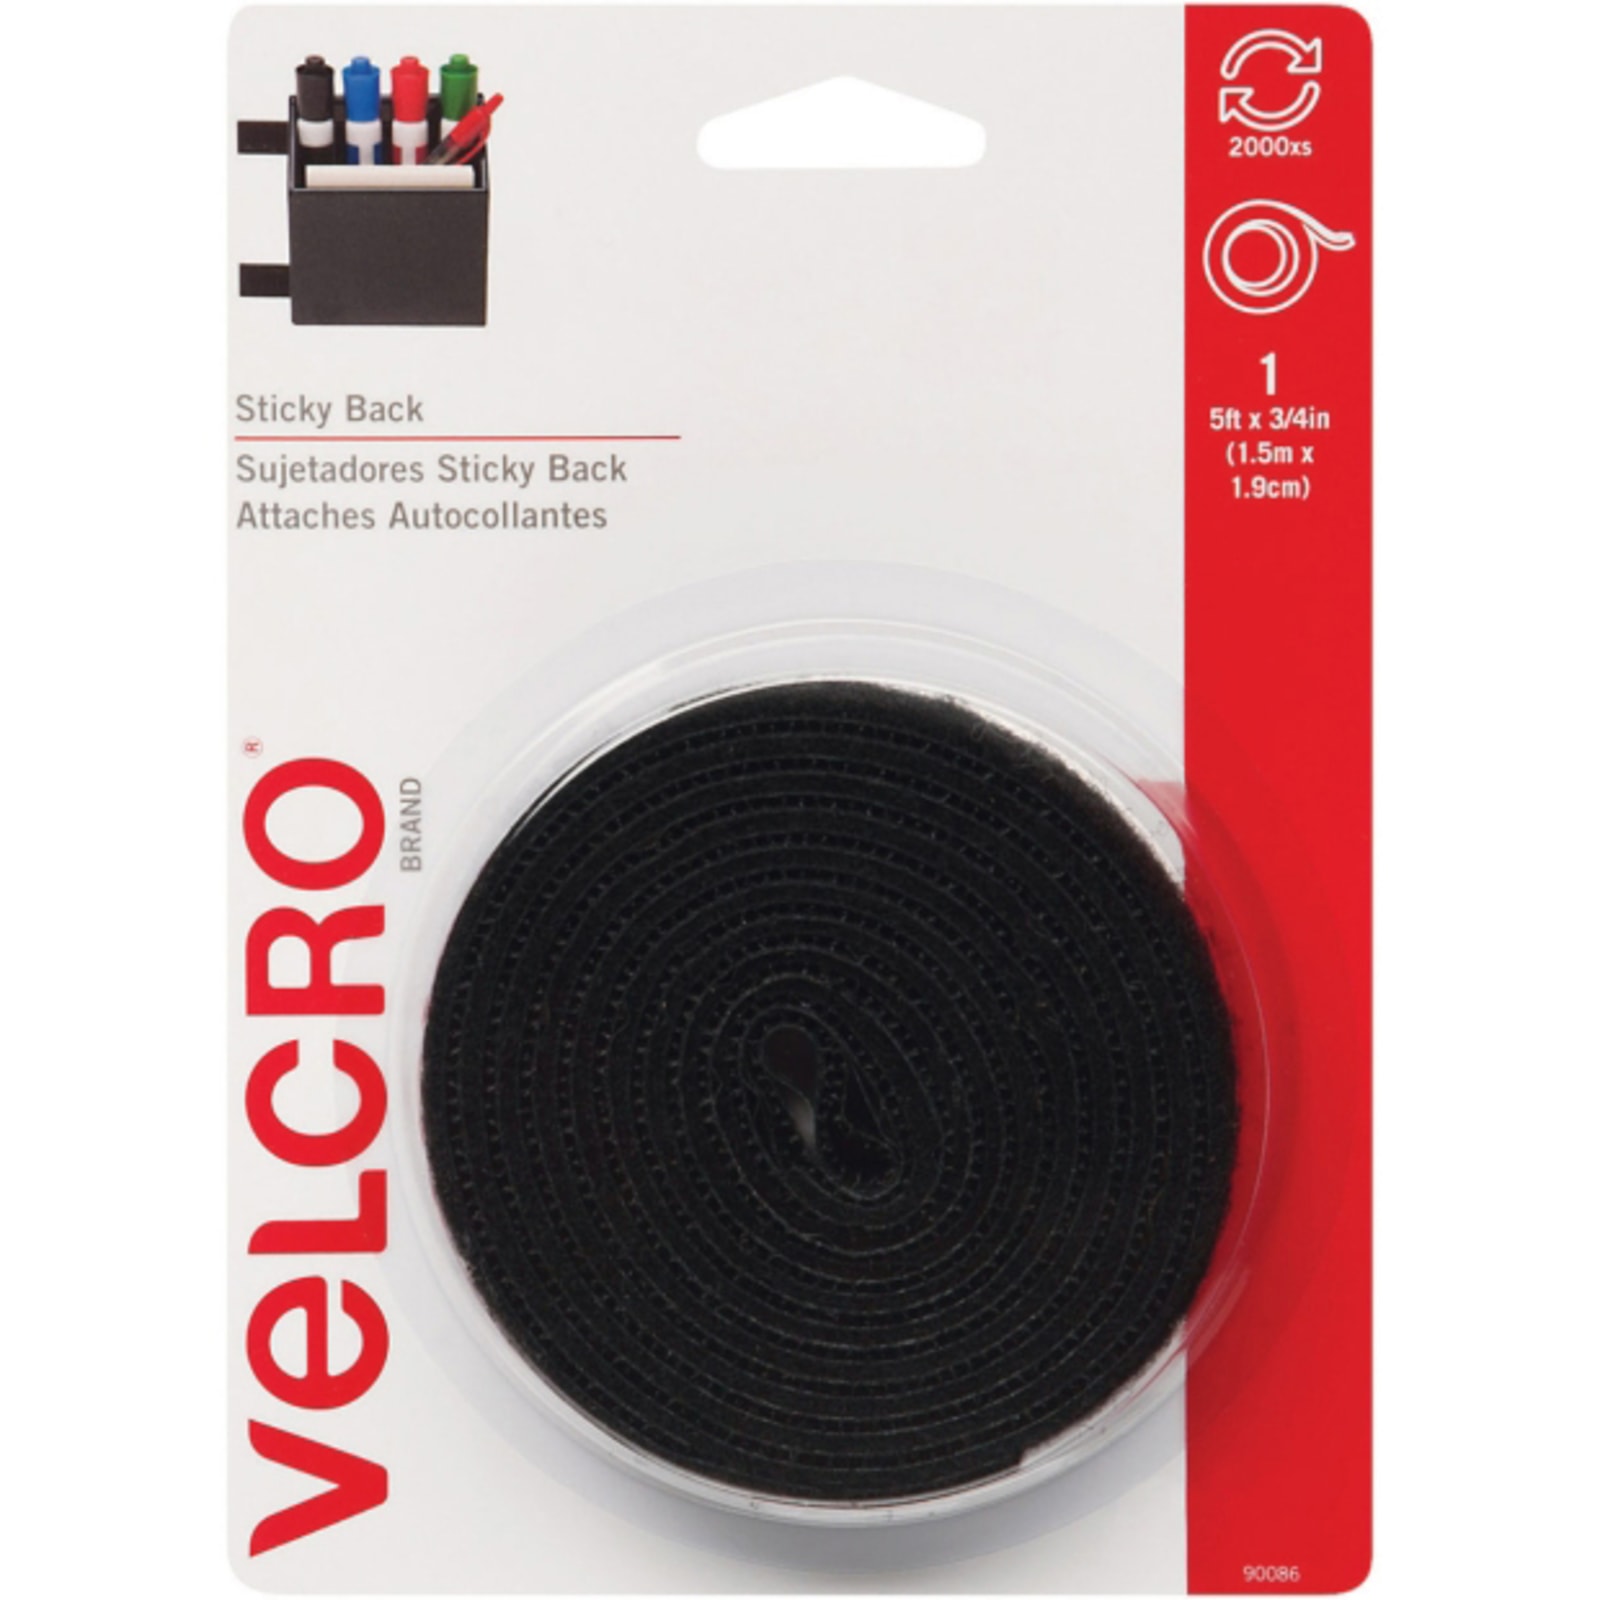 VELCRO Heavy-Duty Adhesive Tape - 4 Ft. by VELCRO at Fleet Farm